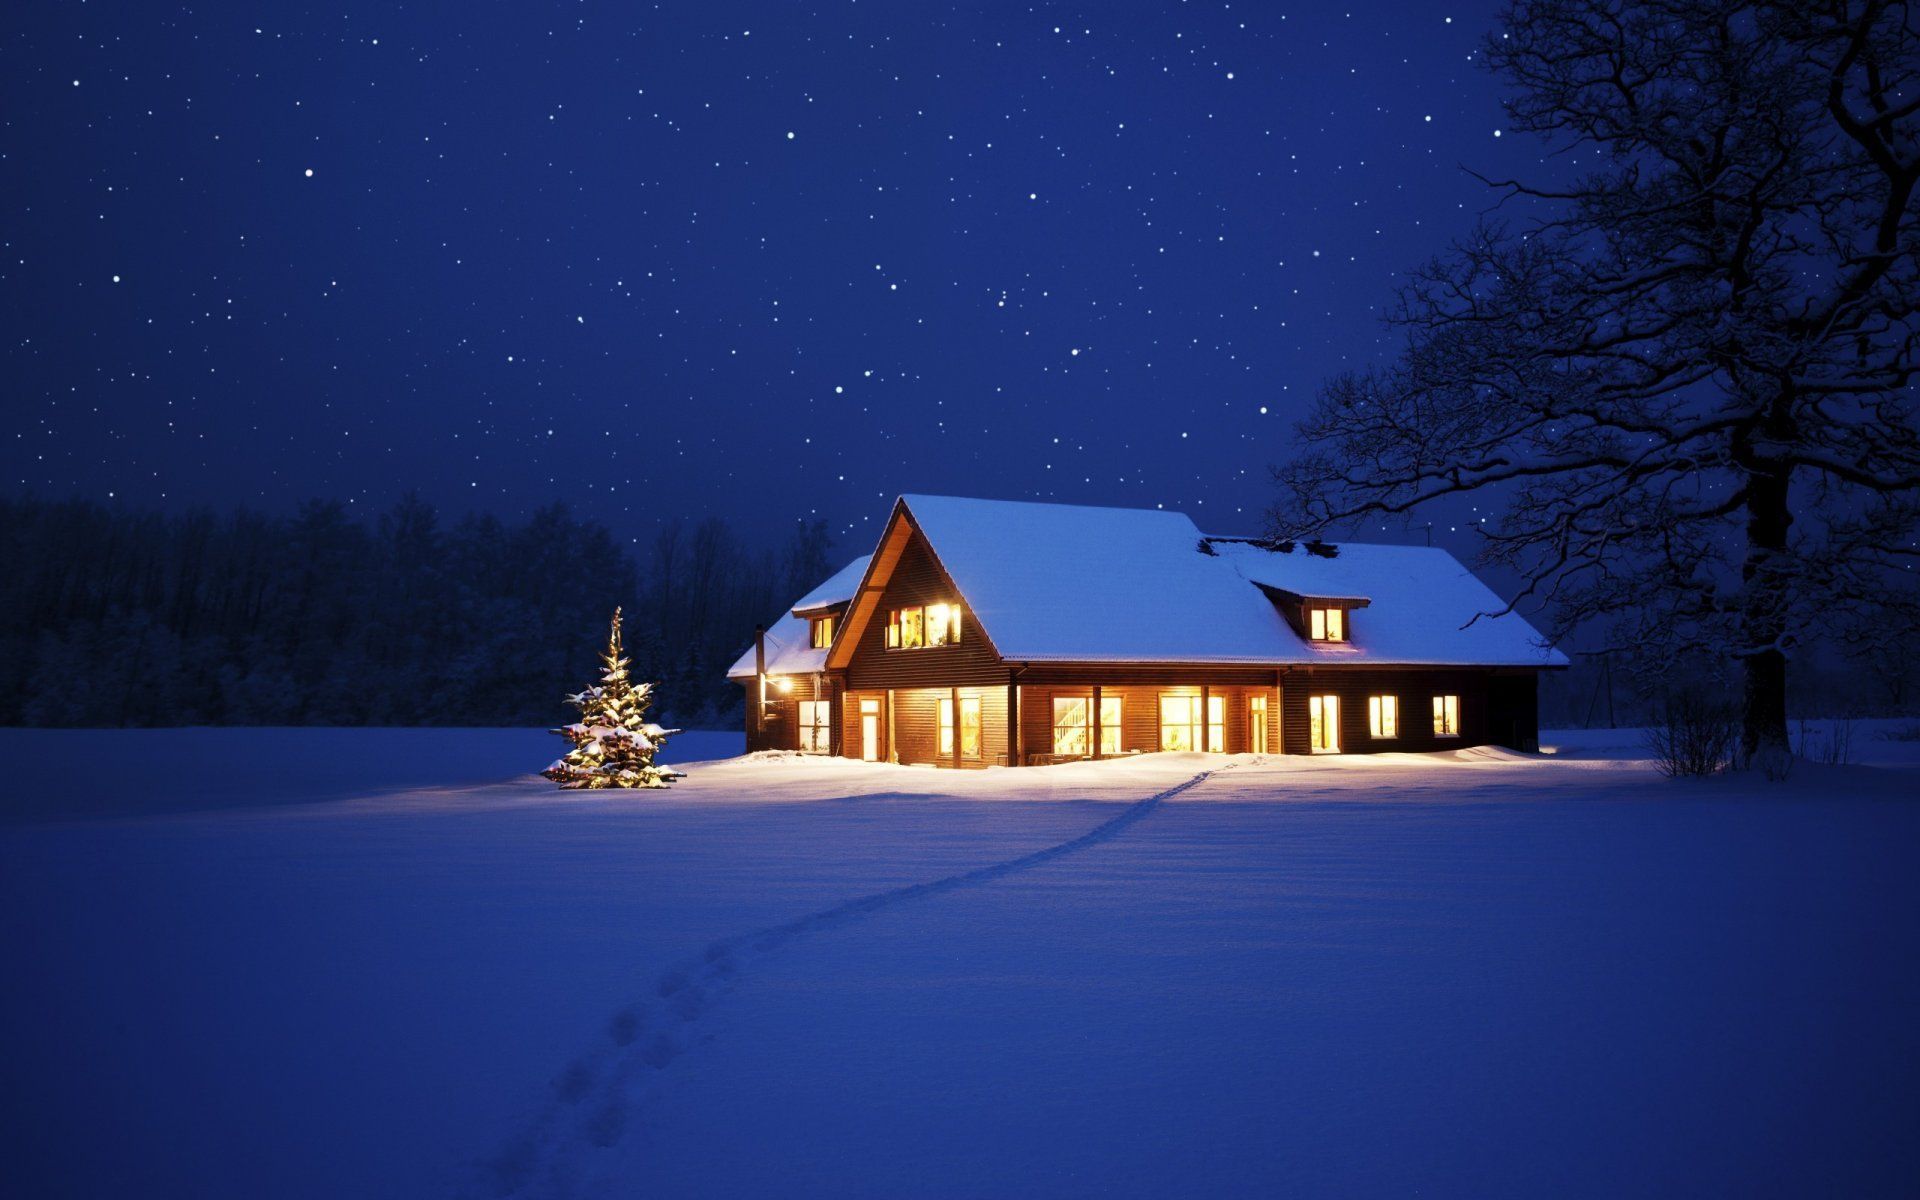 Winter House Night Christmas New Year Christmas. Winter House, House In The Woods, House